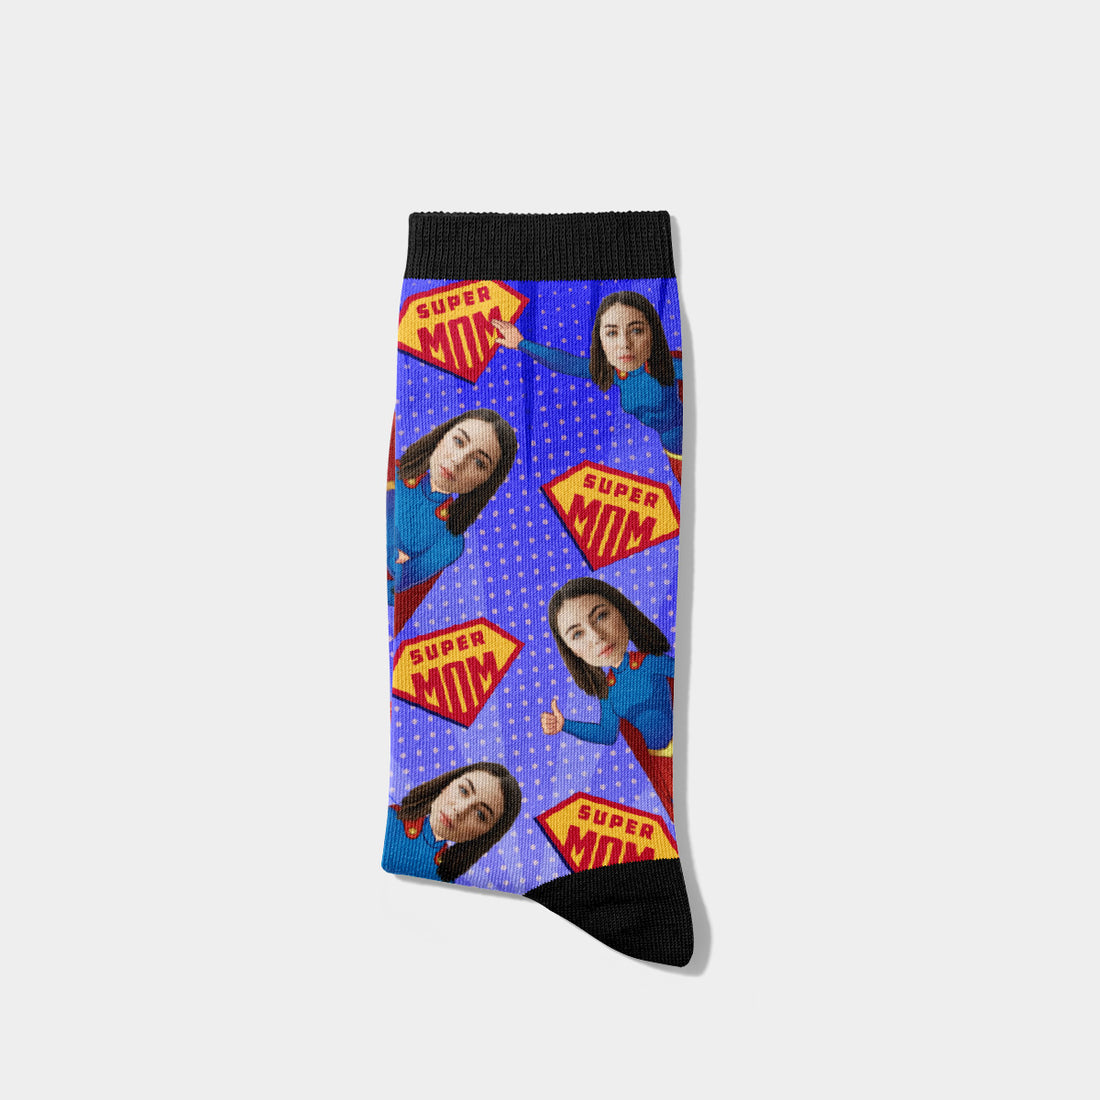 Personalized Super Mum Socks